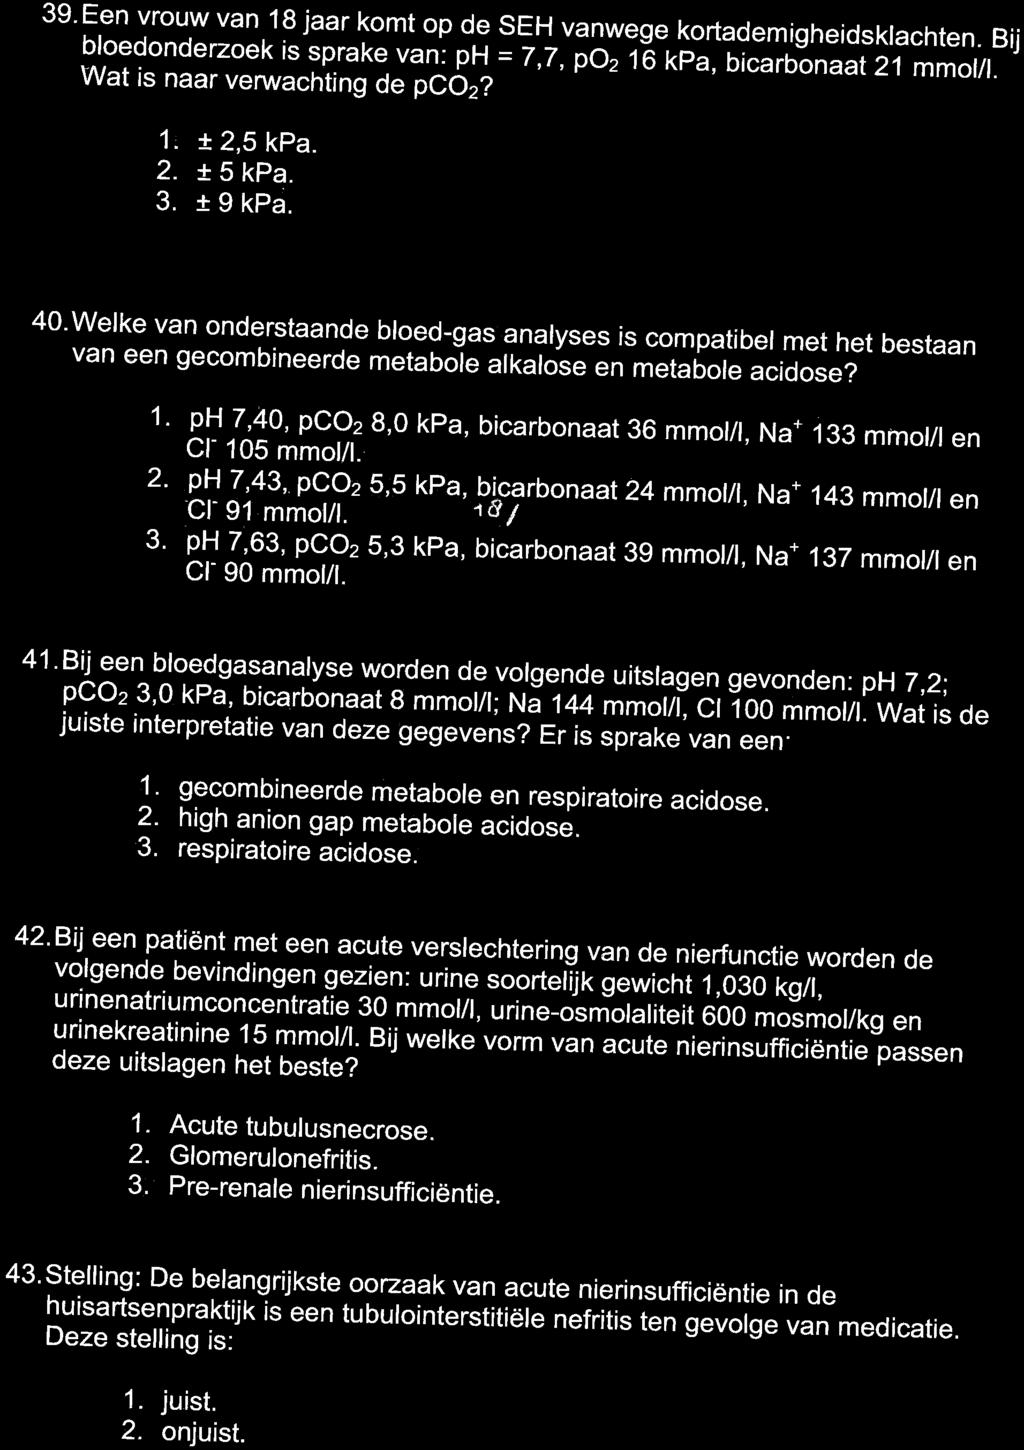 "er is sprak'e'van le/en"""ul/1' vval ls ( ^^ - {-('004<S Y I. gecombineerde metabole en respiratoire acidose. anion gap metabole acidose. 3. respiratoire acidose. t^- 1.^ -Ah 42'BJJi^pa?elmet.